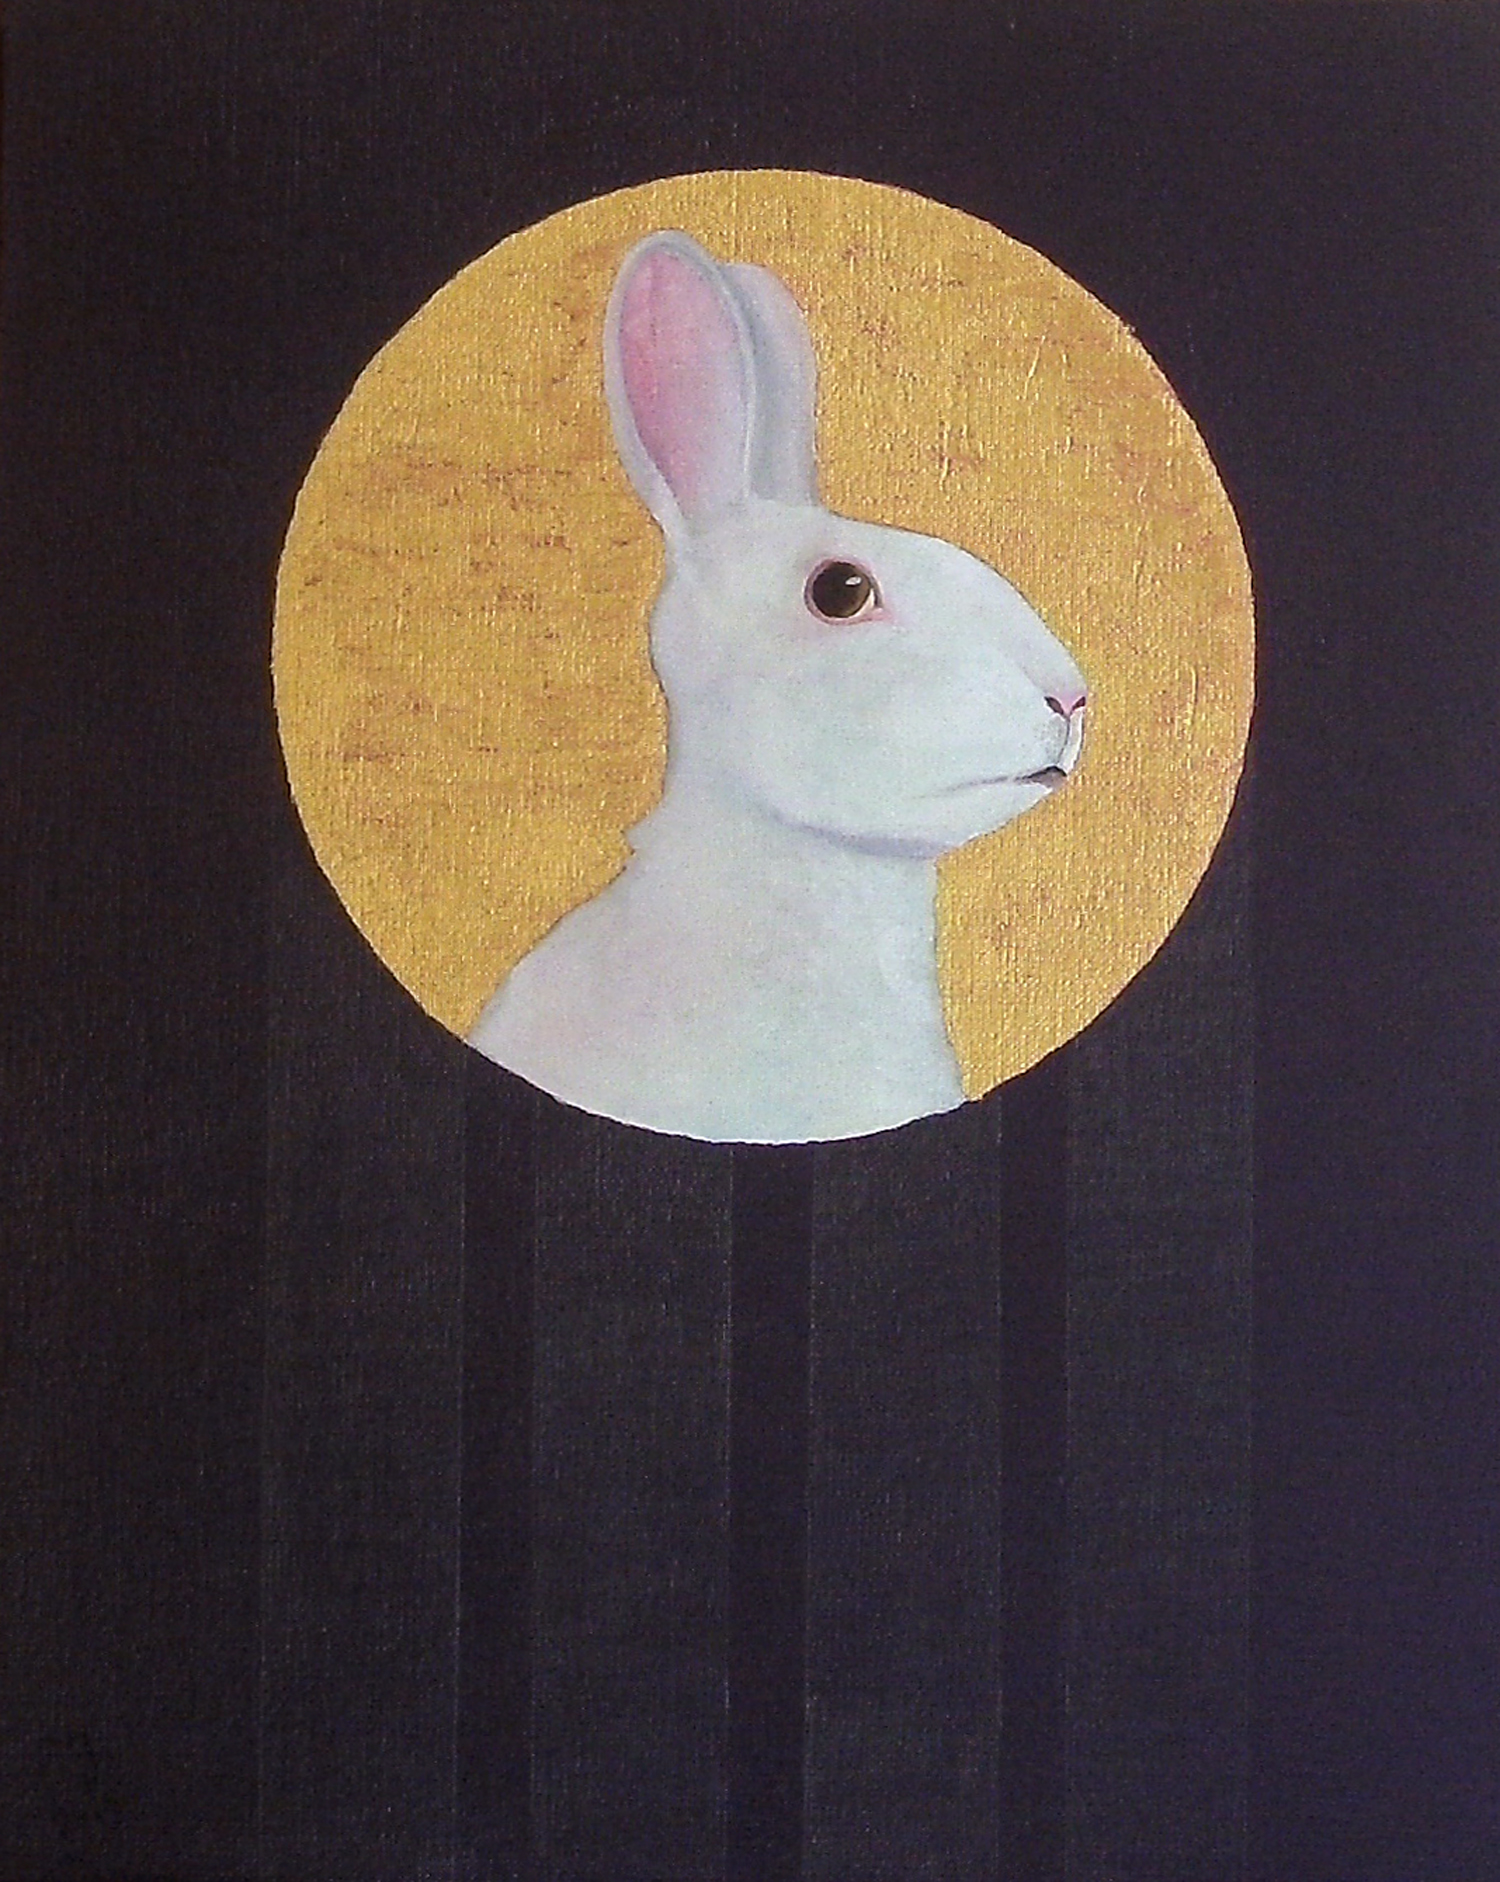 patrick gourgouillat - "Albino Rabbit And The Parallel Lines [Animals]" - 2019